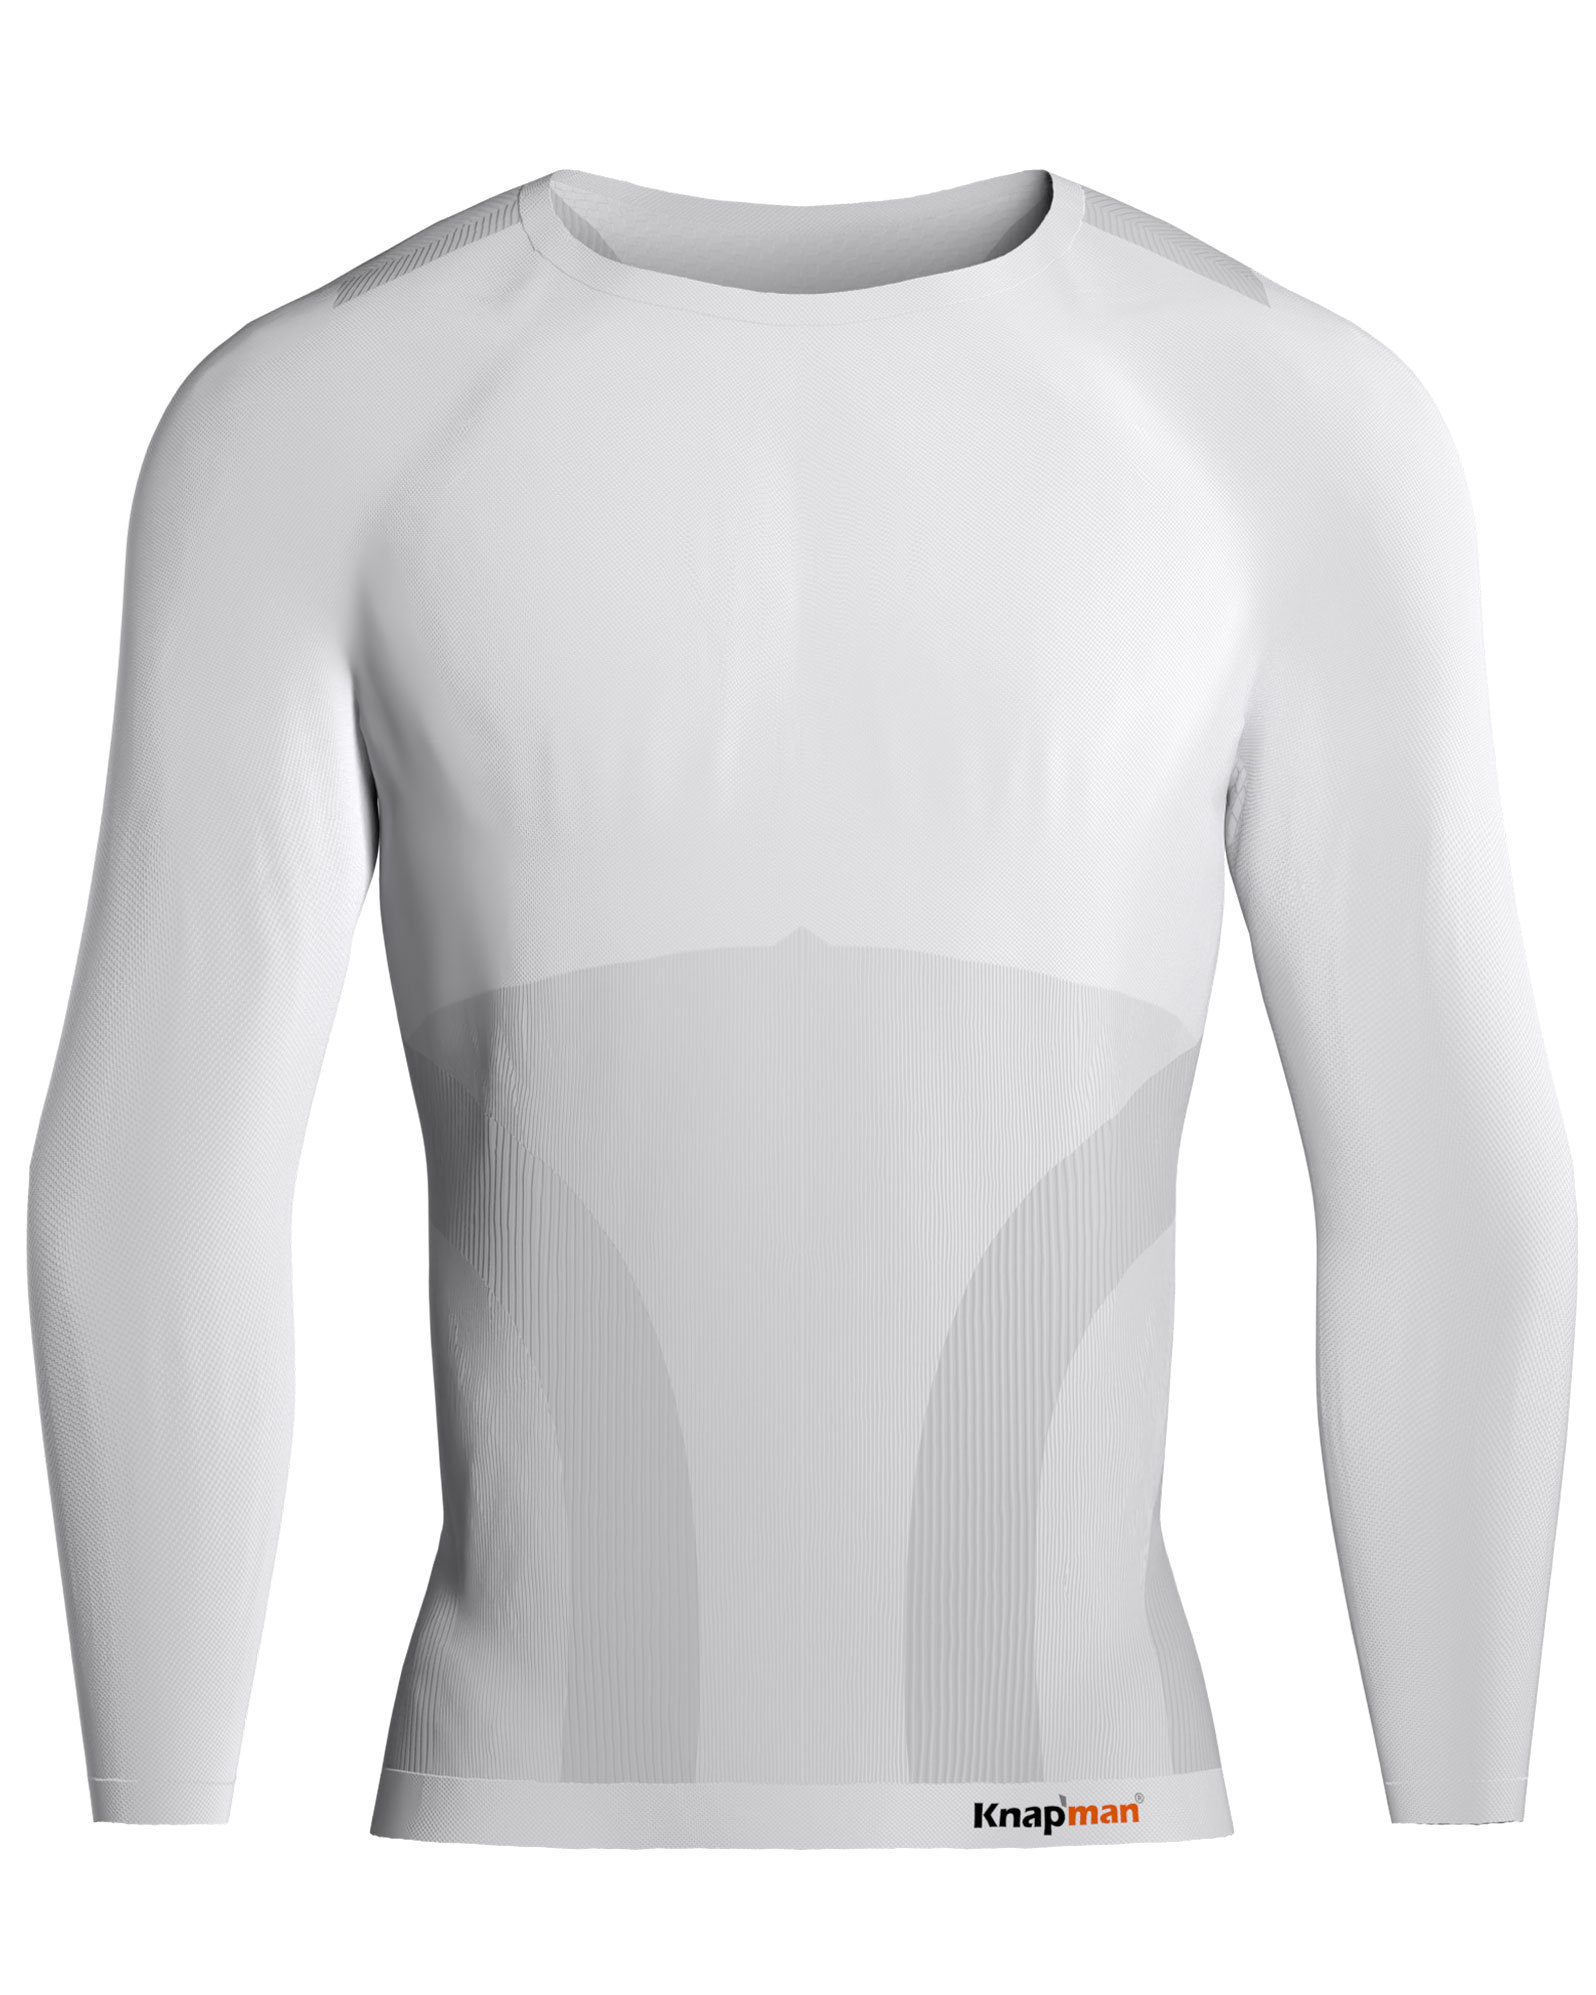 Knap'man Pro Performance Baselayer Shirt Long Sleeve Weiß